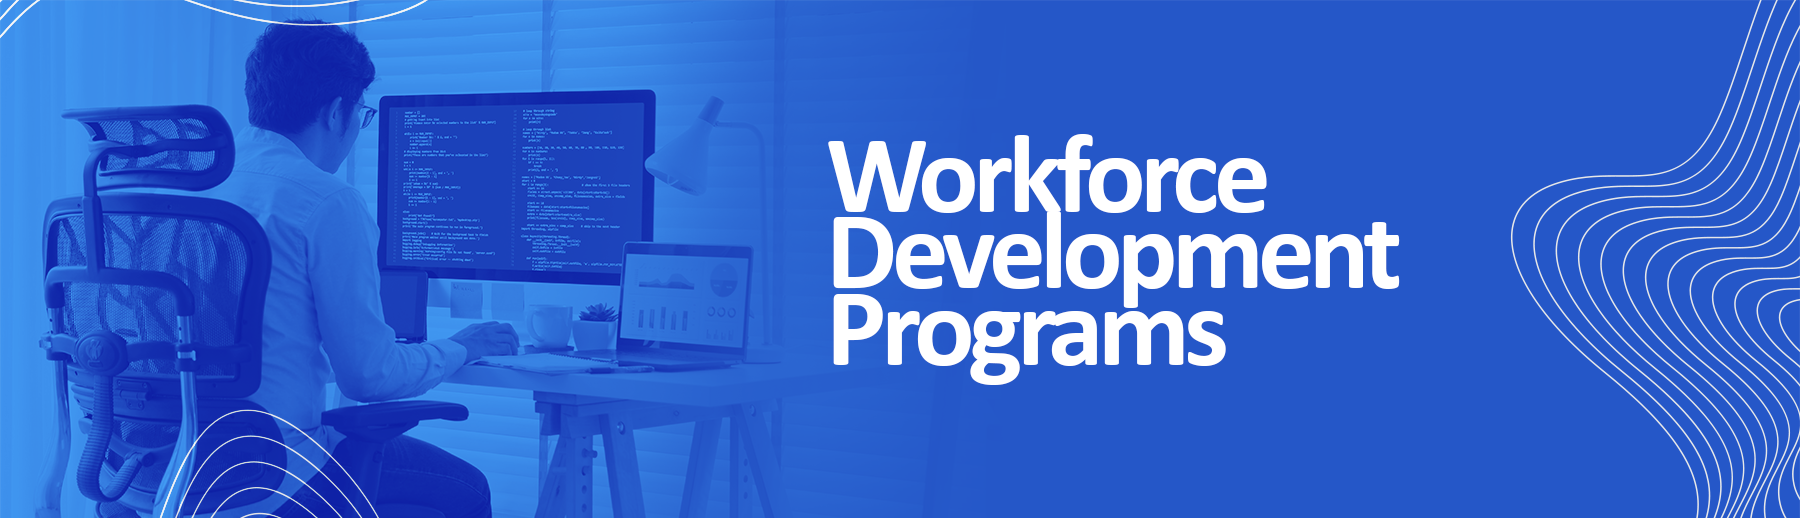 Workforce Development Programs